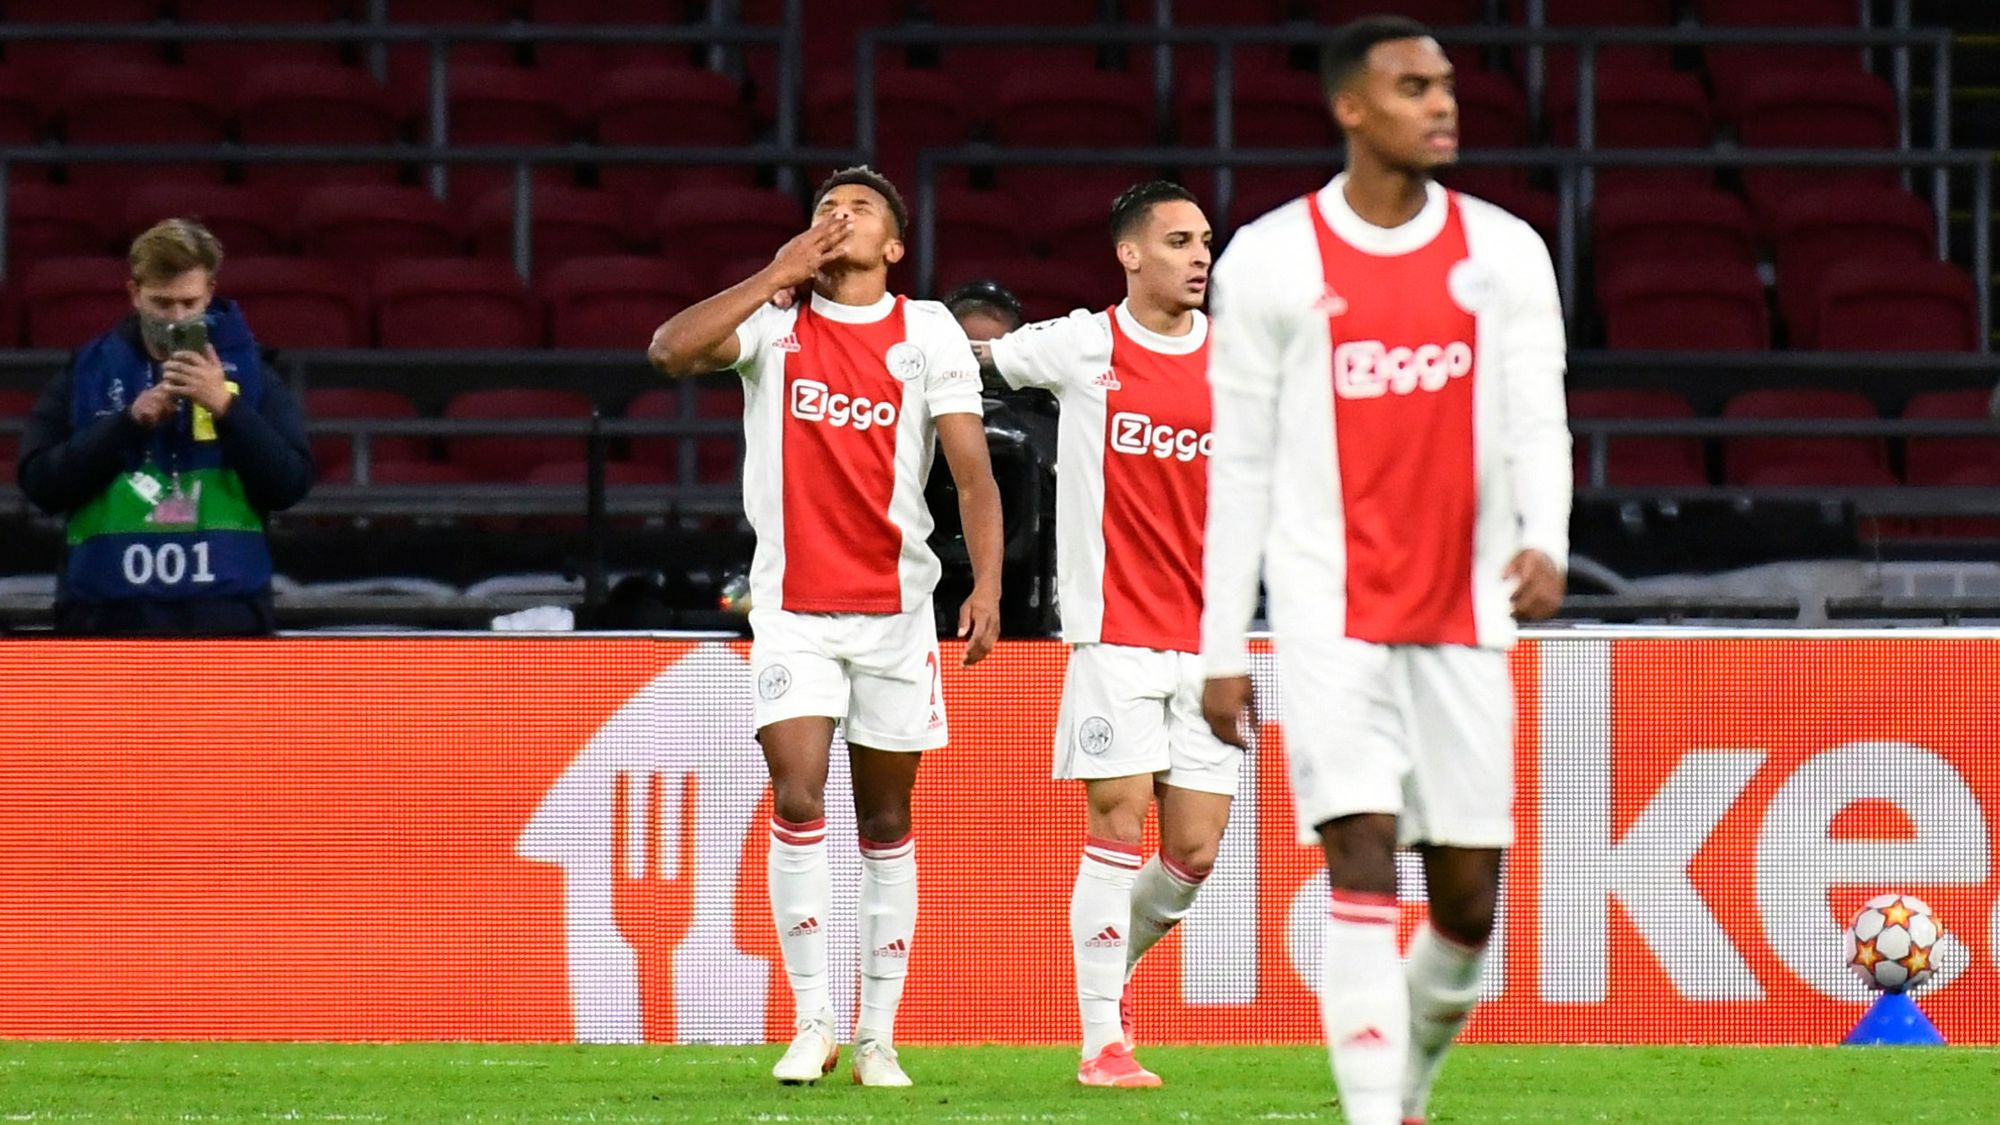 Histórico triunfo de Ajax en la Champions League sobre Sporting